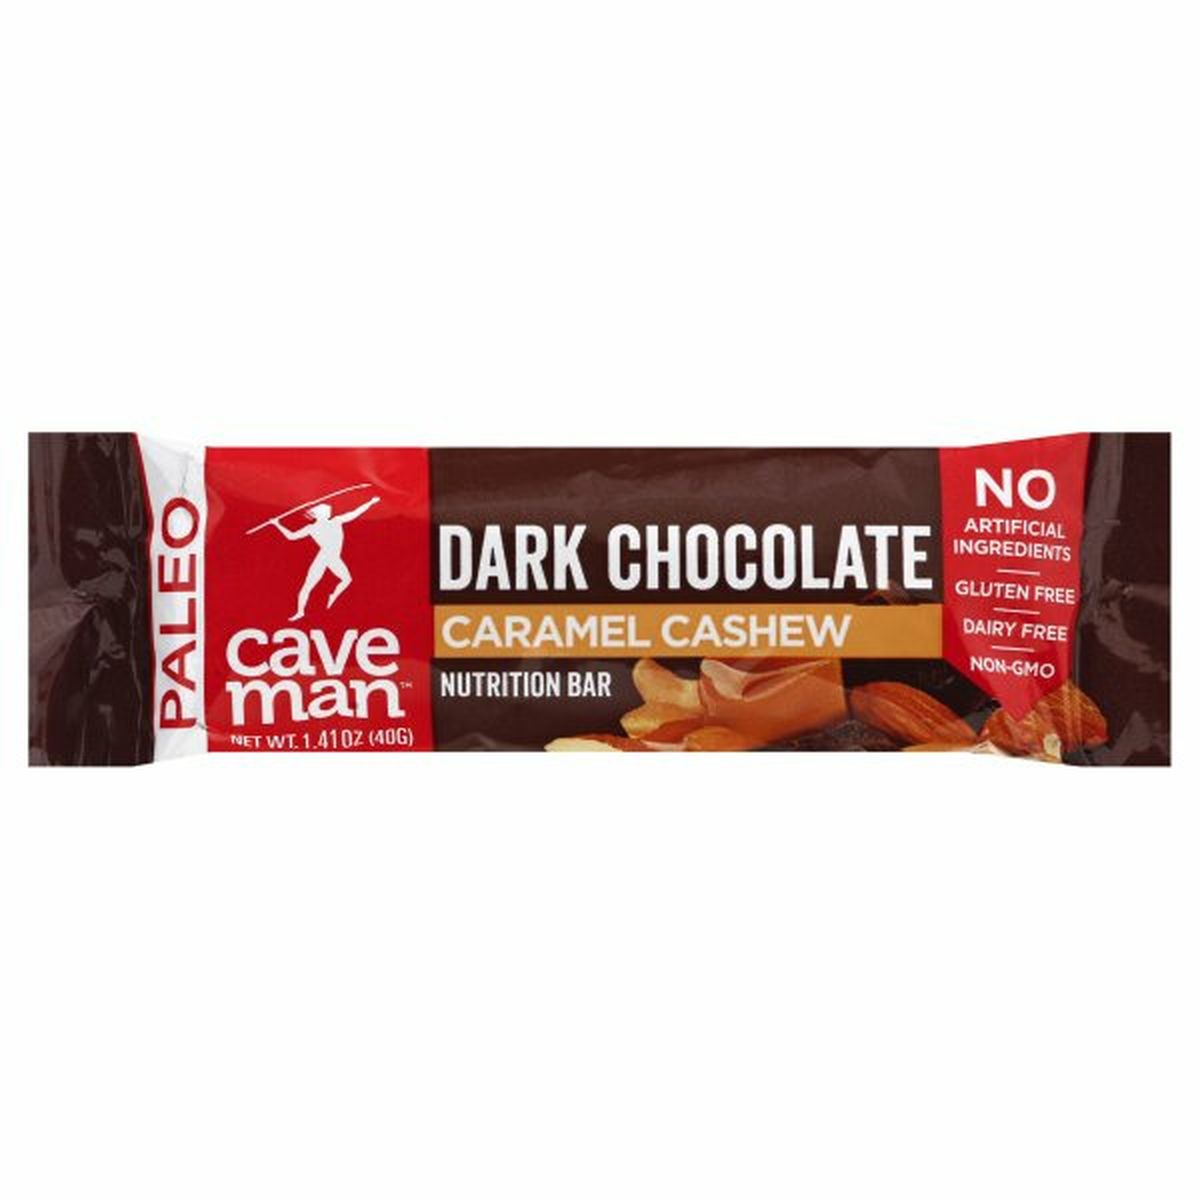 Calories in Caveman Nutrition Bar, Dark Chocolate, Caramel Cashew